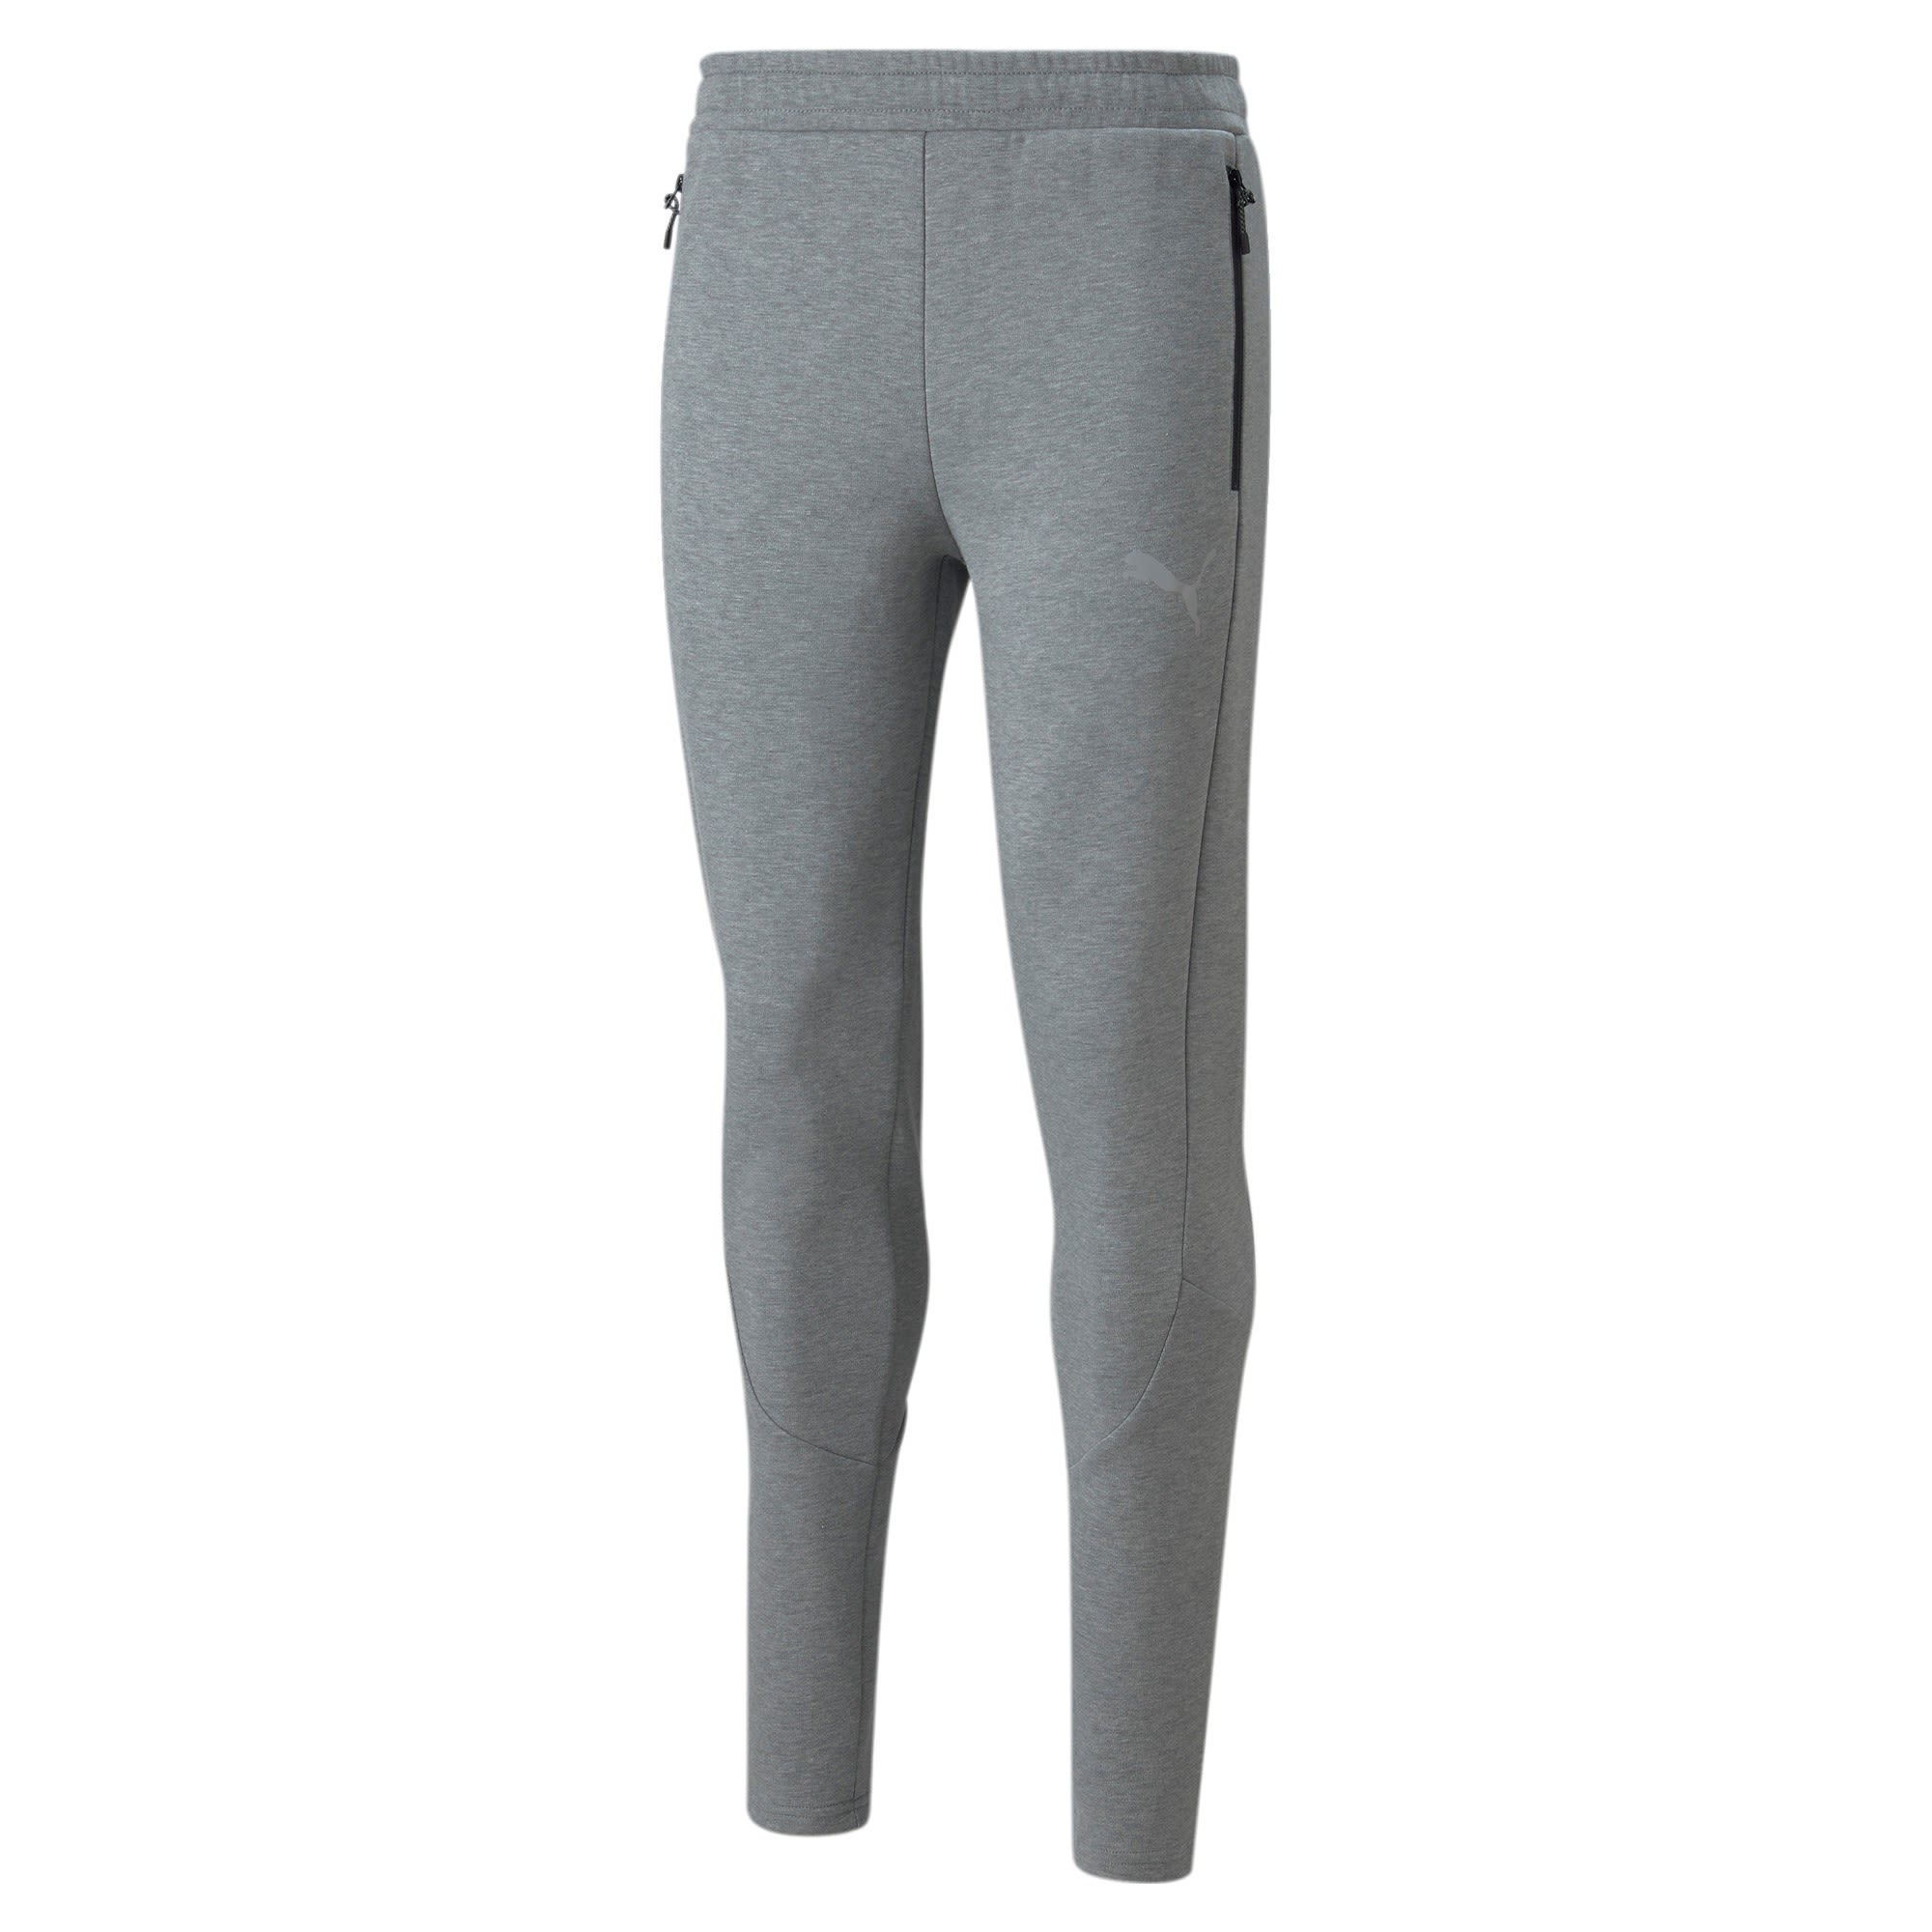 Puma Evostripe Pants Grau- Male Softshellhosen- Grsse 3XL - Farbe Medium Gray Heather